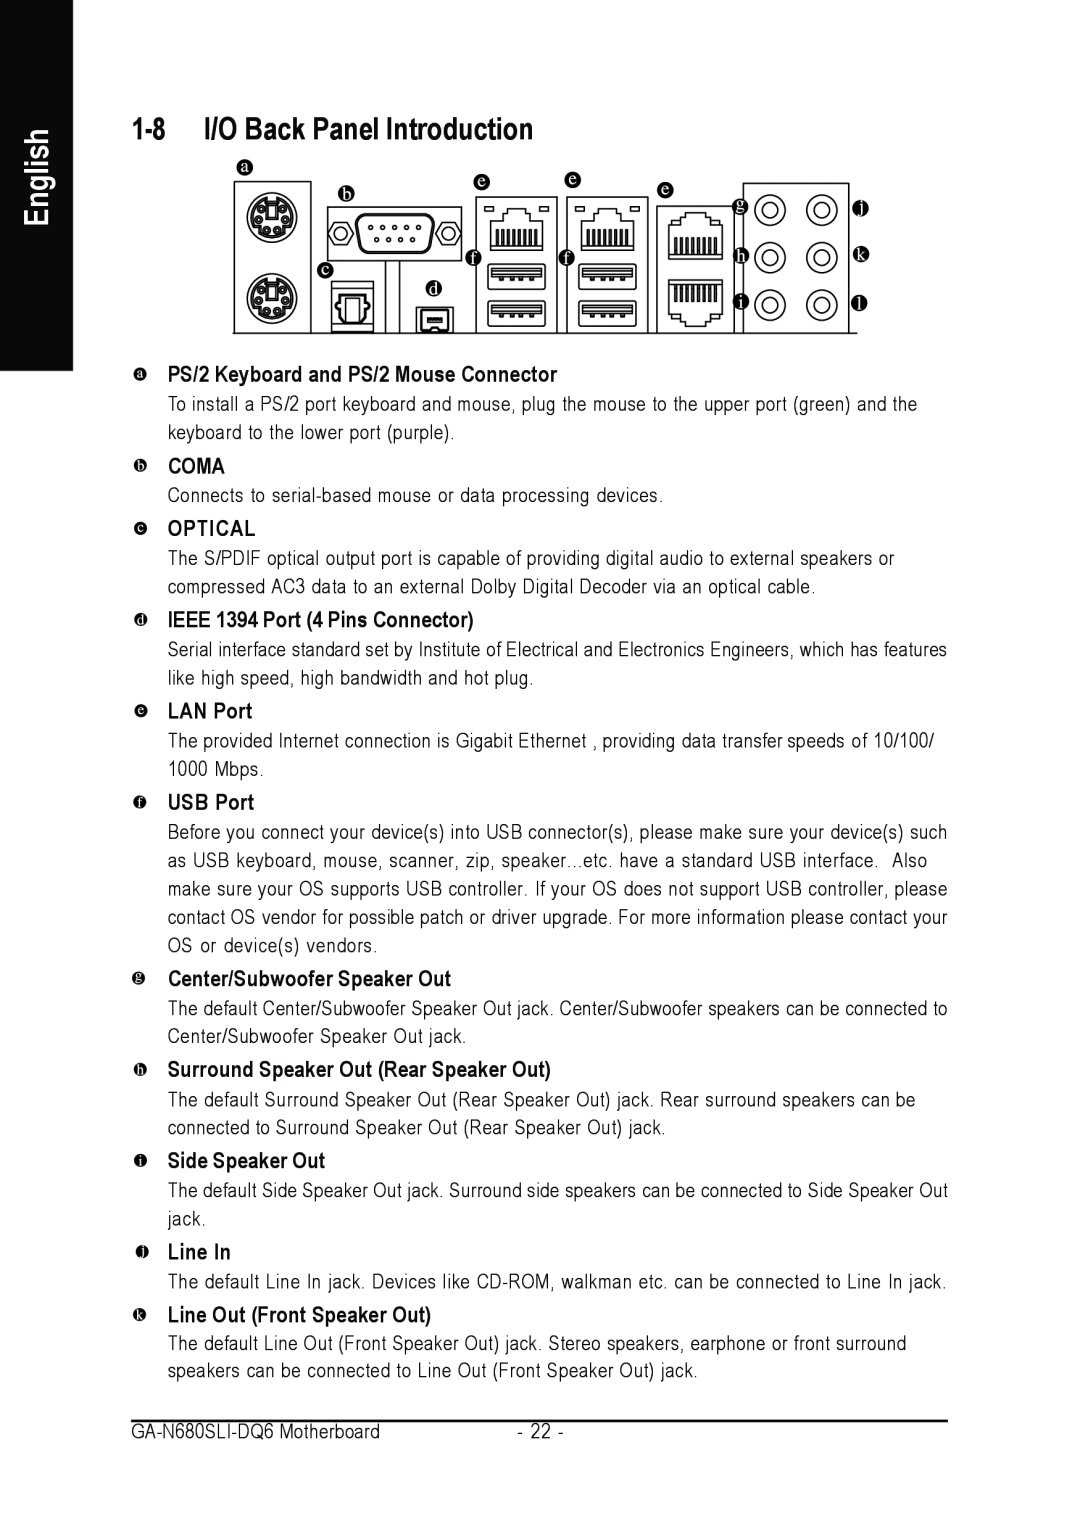 Intel GA-N680SLI-DQ6 1-8 I/O Back Panel Introduction, PS/2 Keyboard and PS/2 Mouse Connector, Coma, Optical, LAN Port 